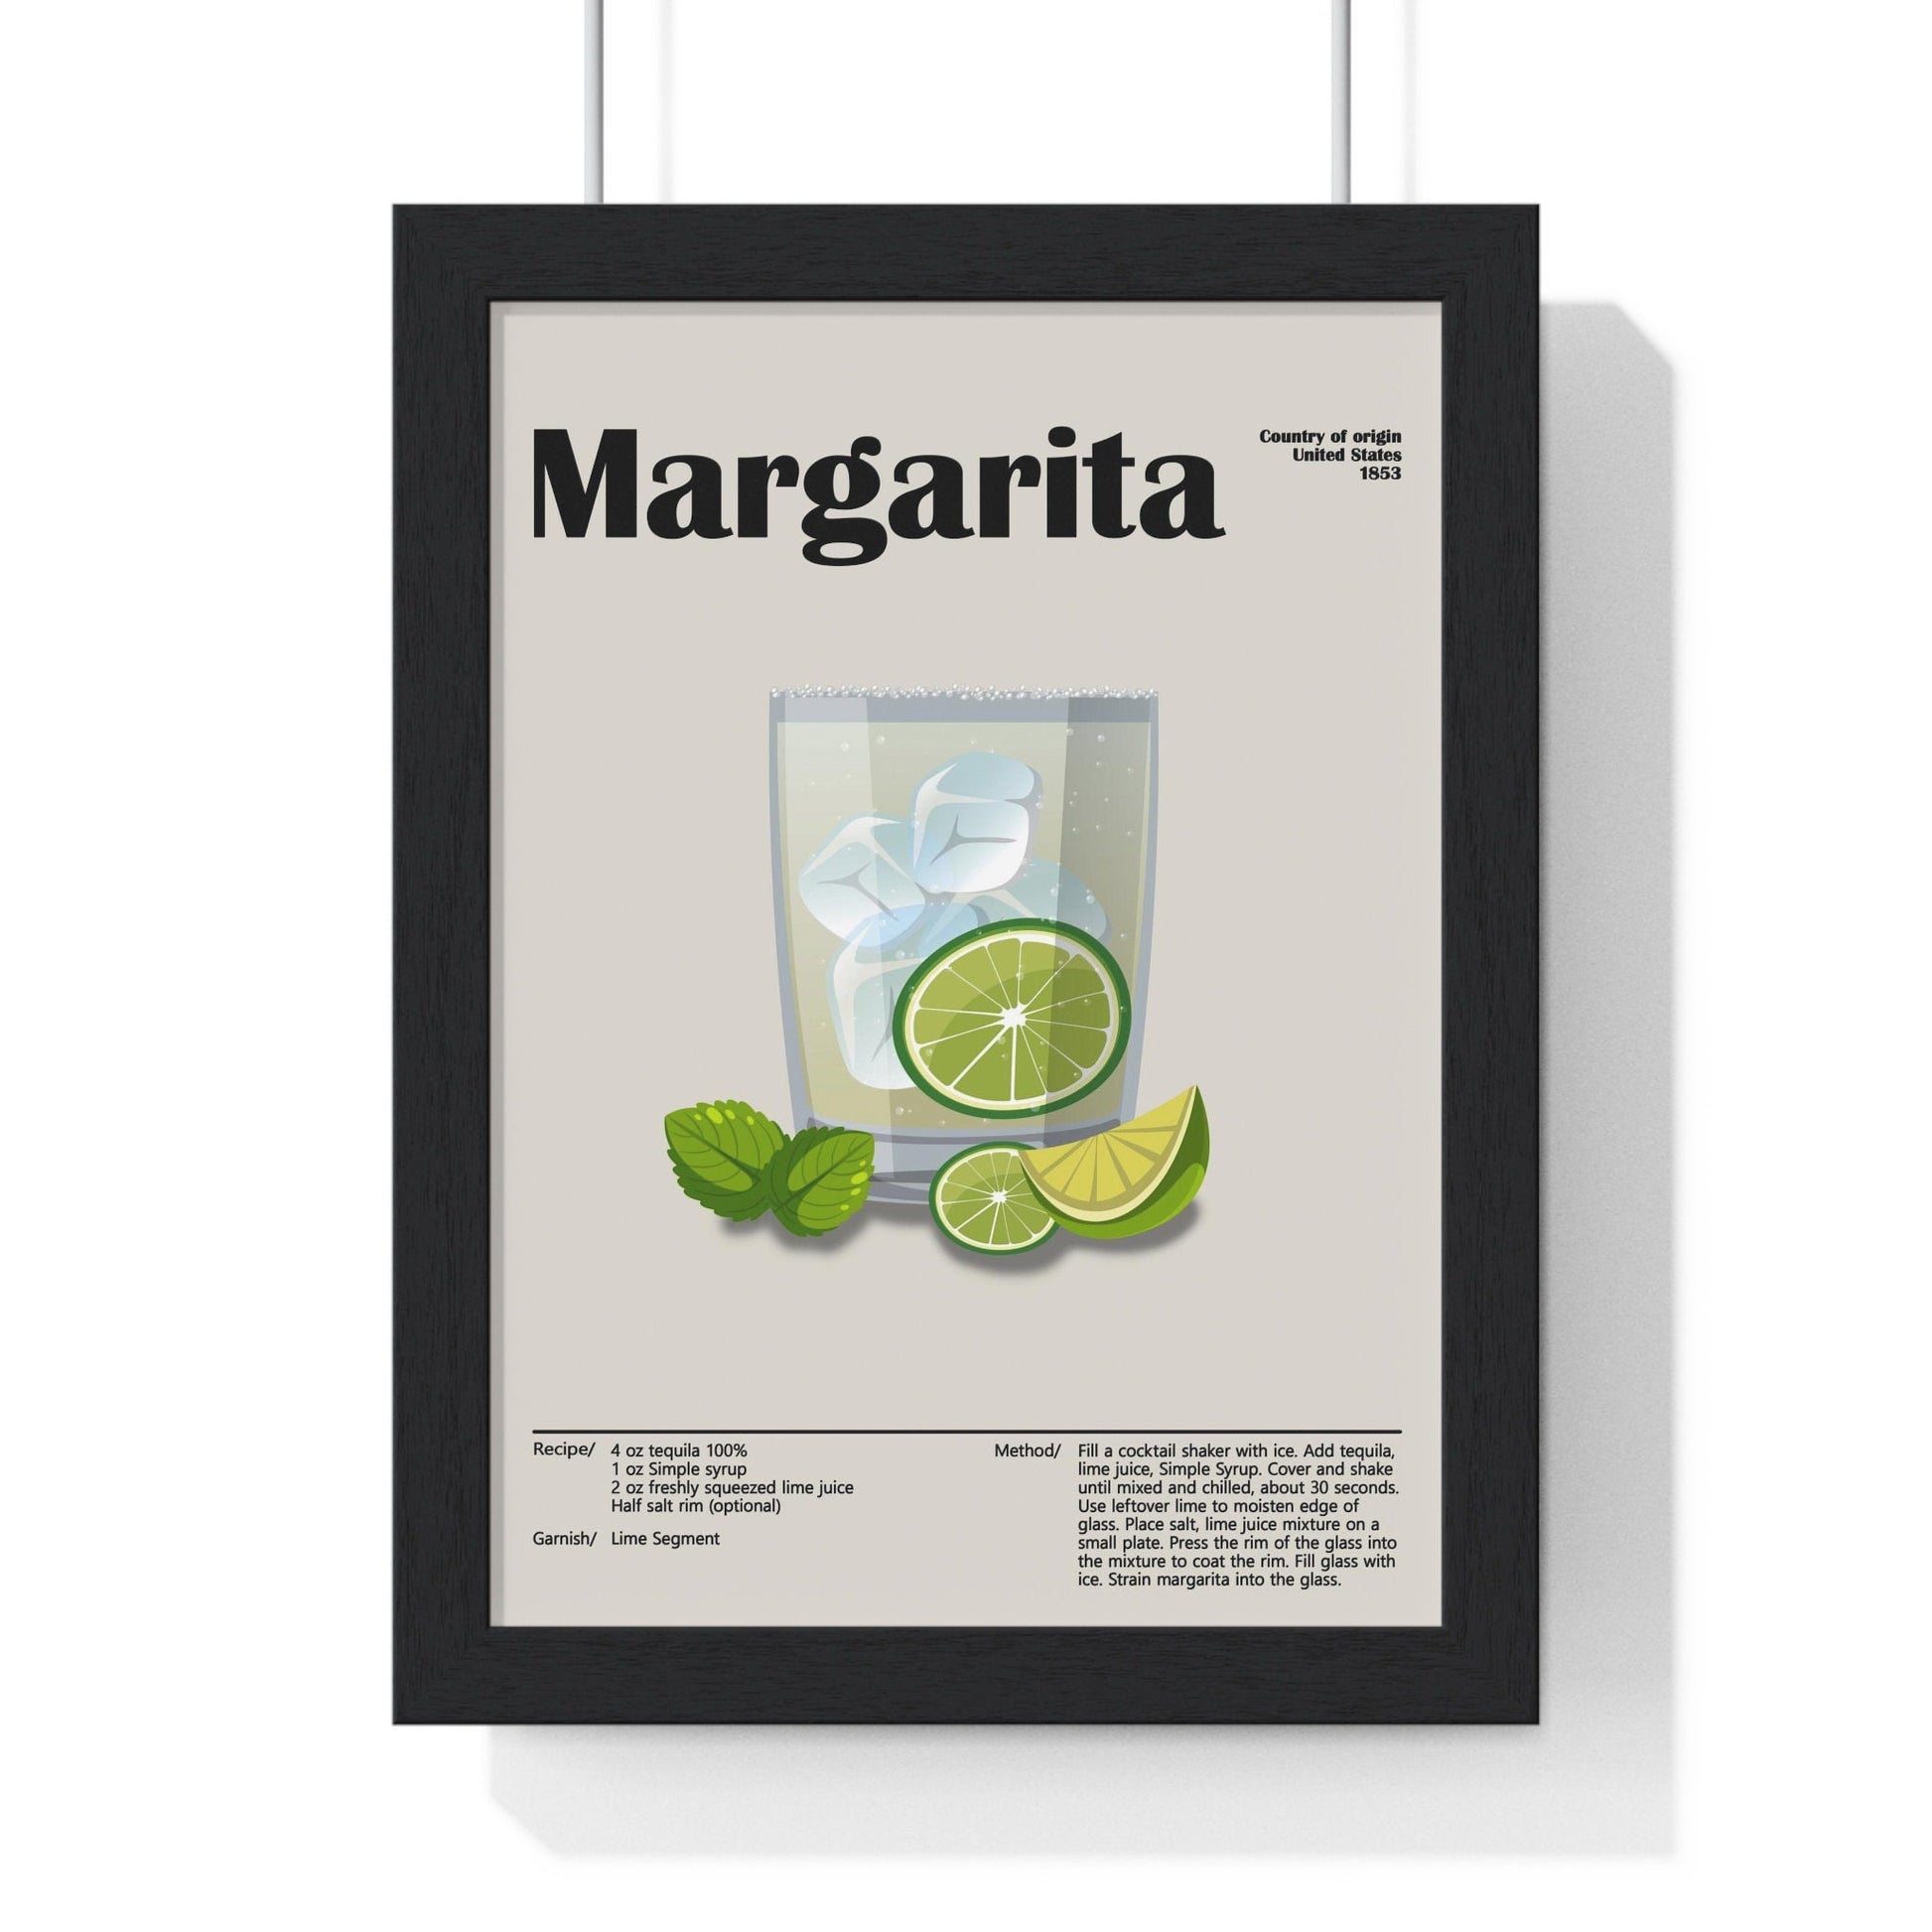 Margarita Cocktail Poster - Poster Kingz